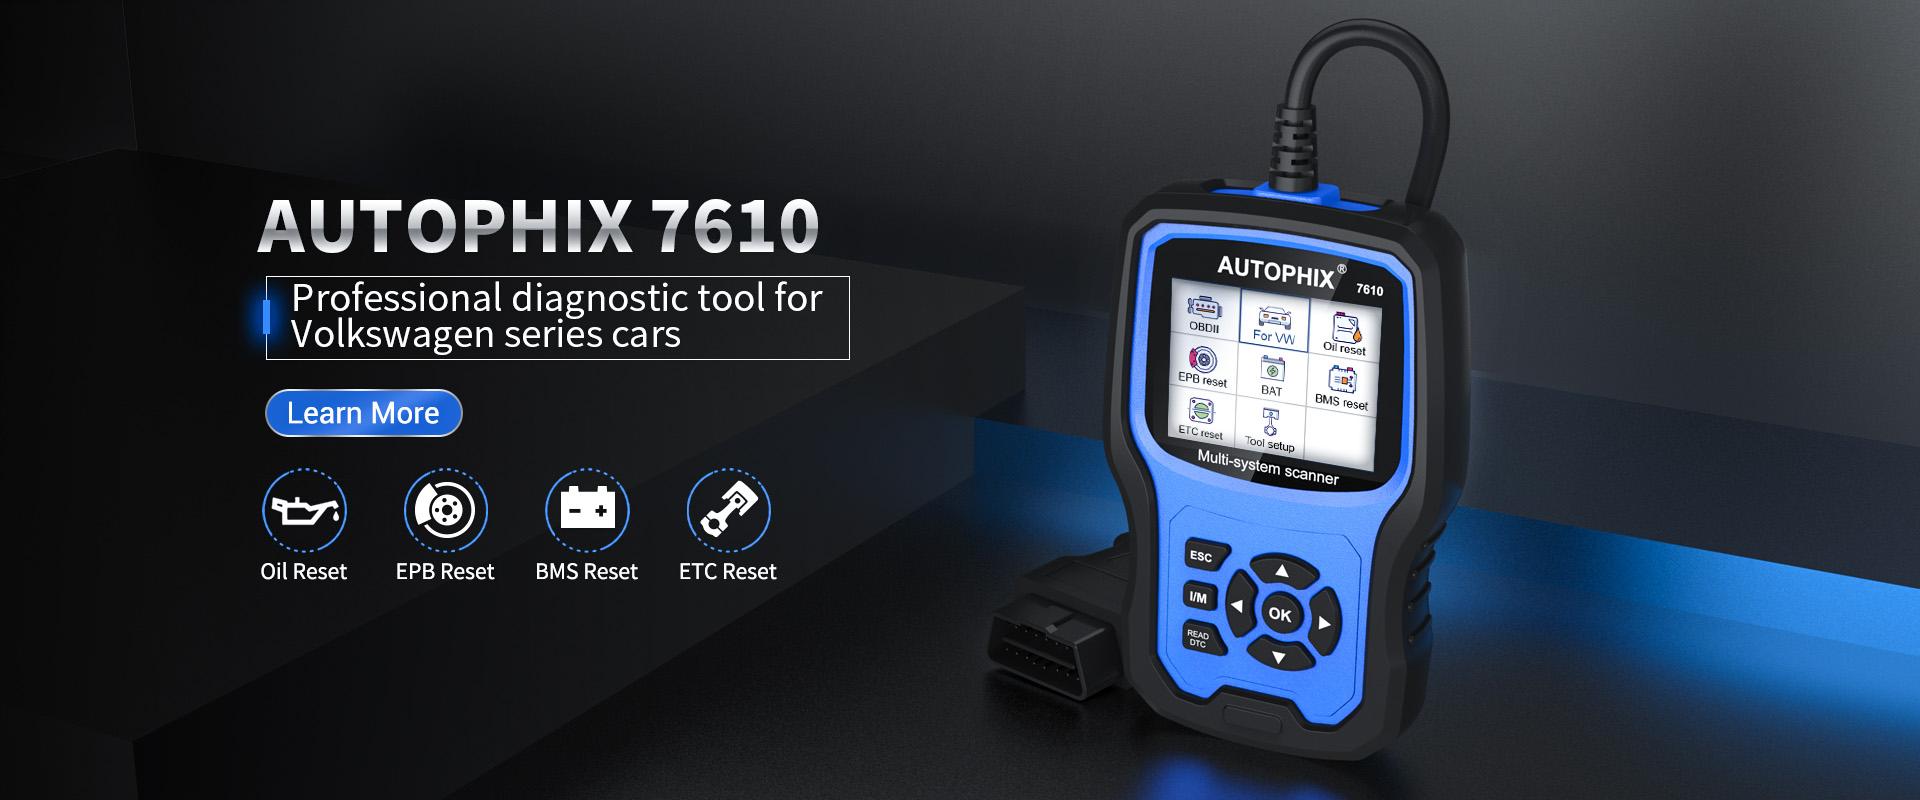 AUTOPHIX 7610-Professional diagnostic tool for Volkswagen series cars